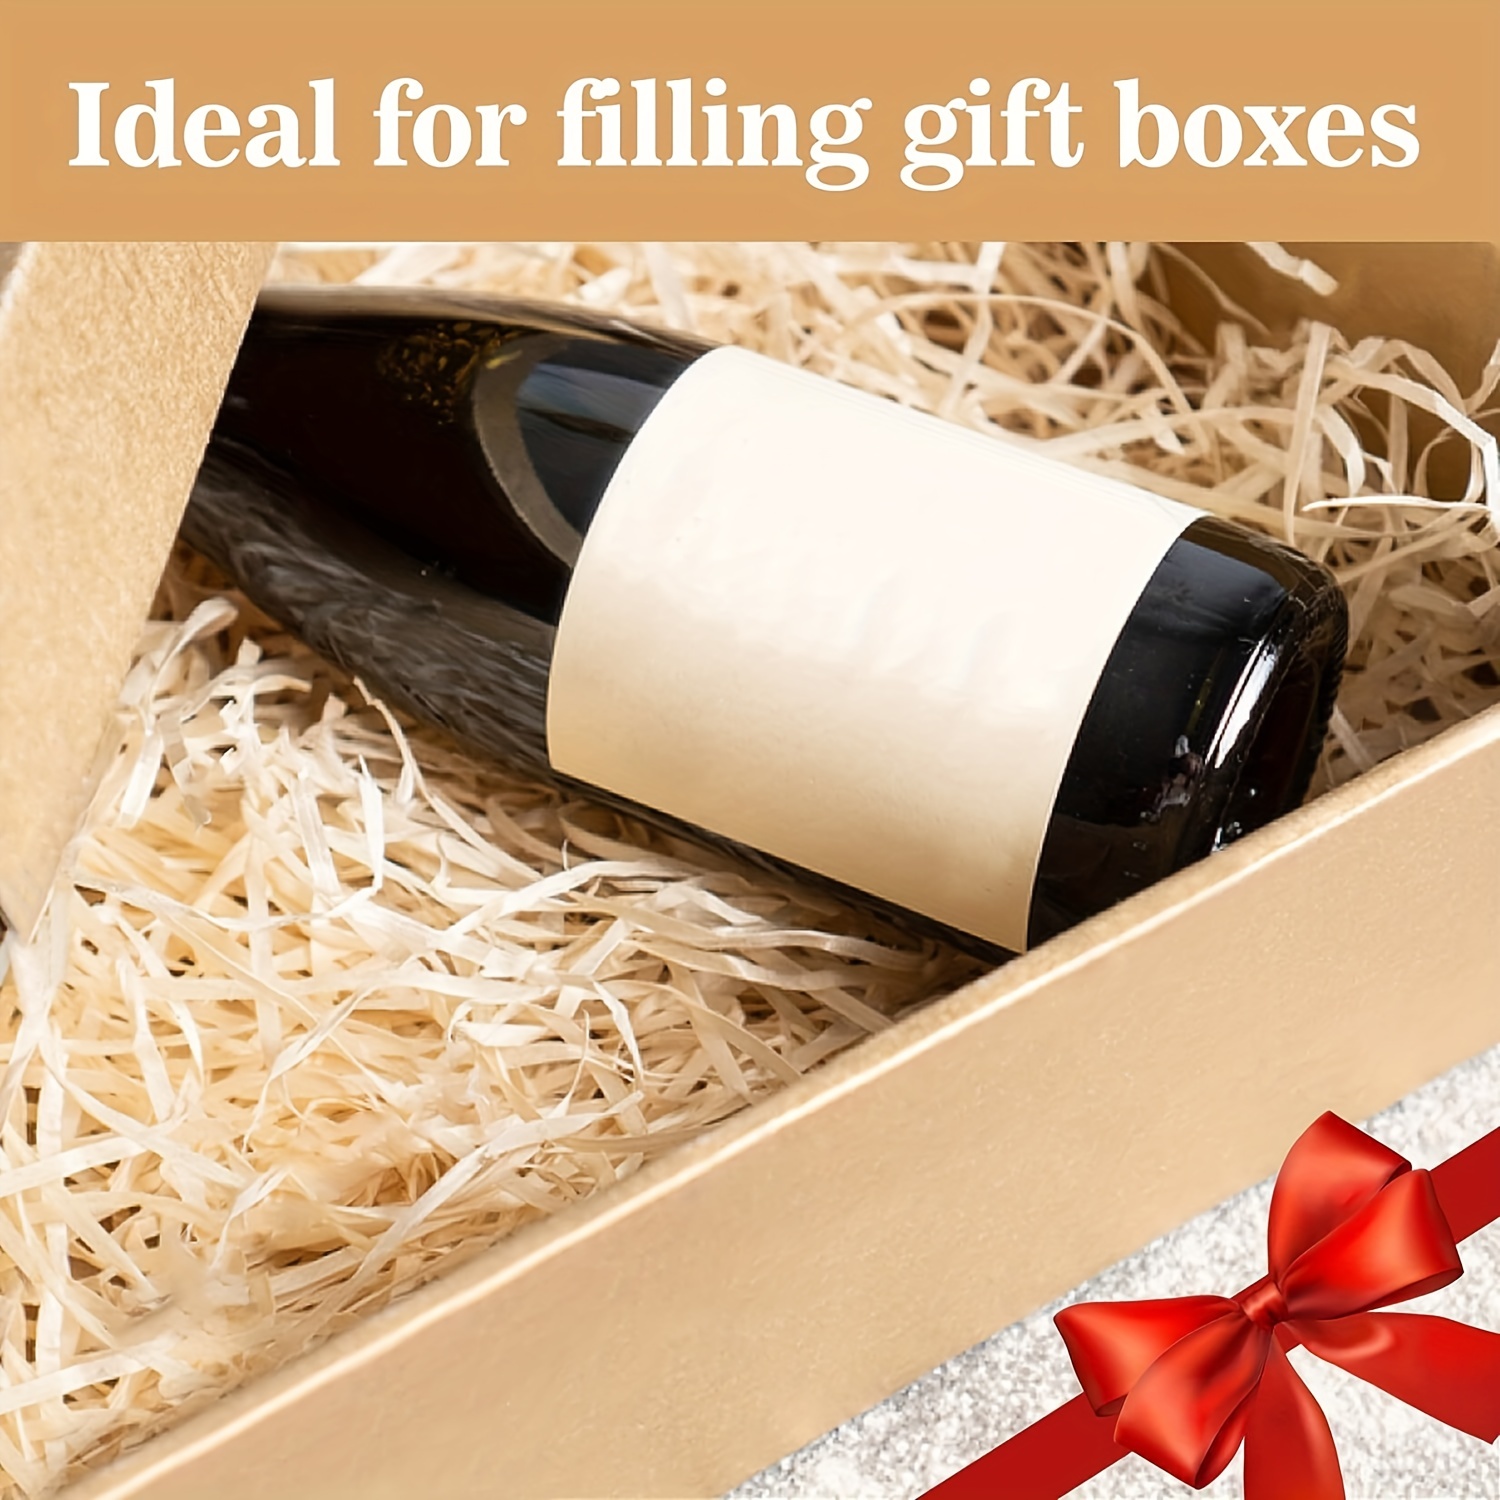 Christmas handmade gift boxes with raffia ribbons, Christmas